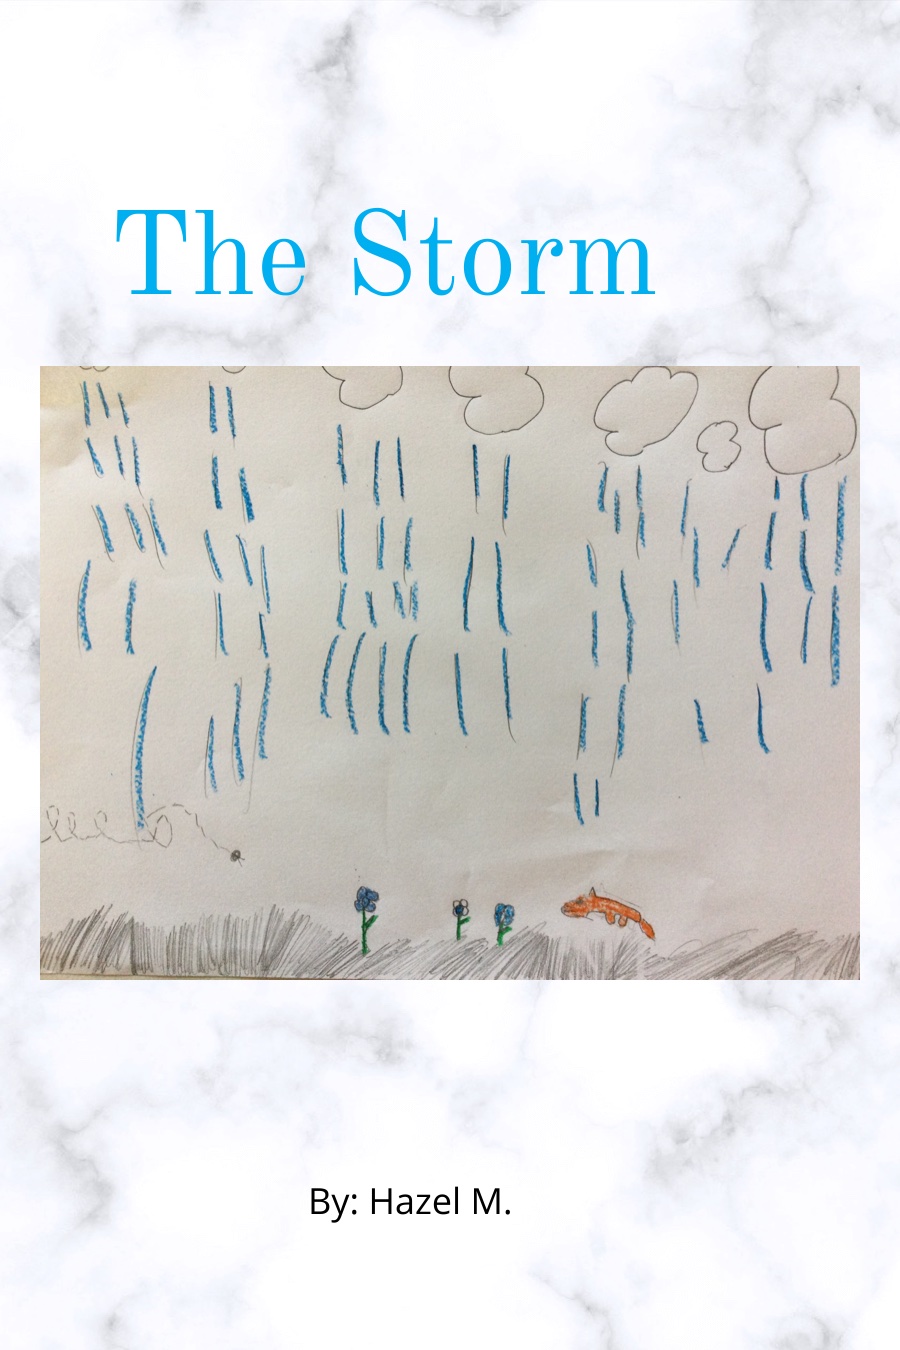 The Storm by Hazel M